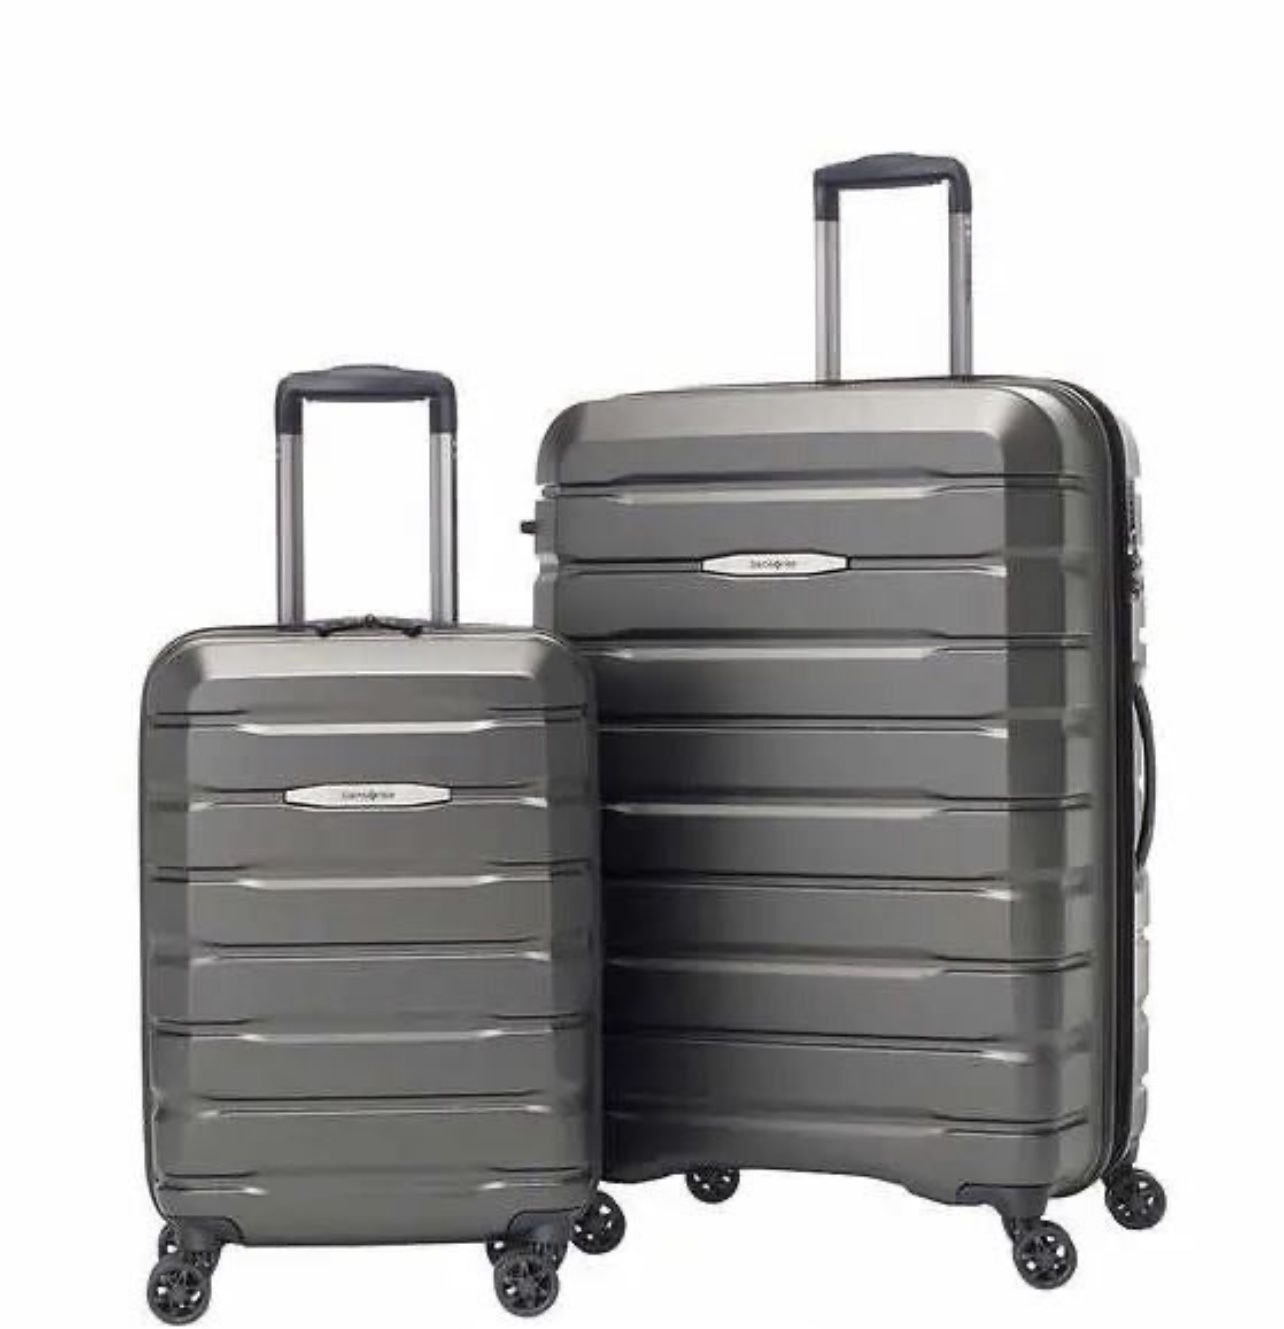 Samsonite Tech Two Hardside 2-piece Luggage Set